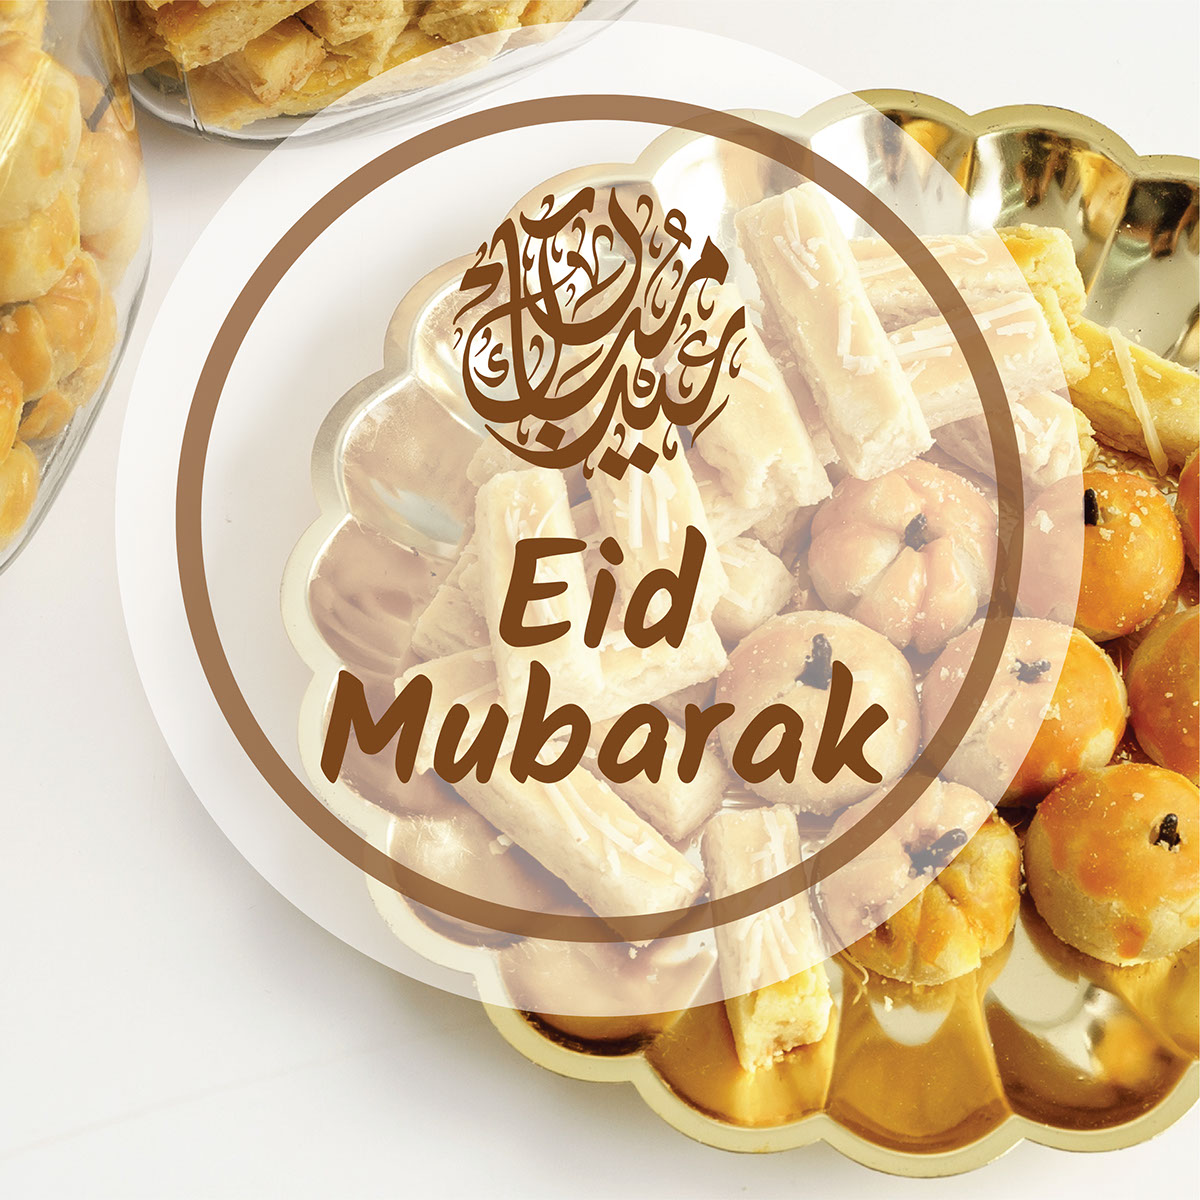 Eid Mubarak wishes rendition image